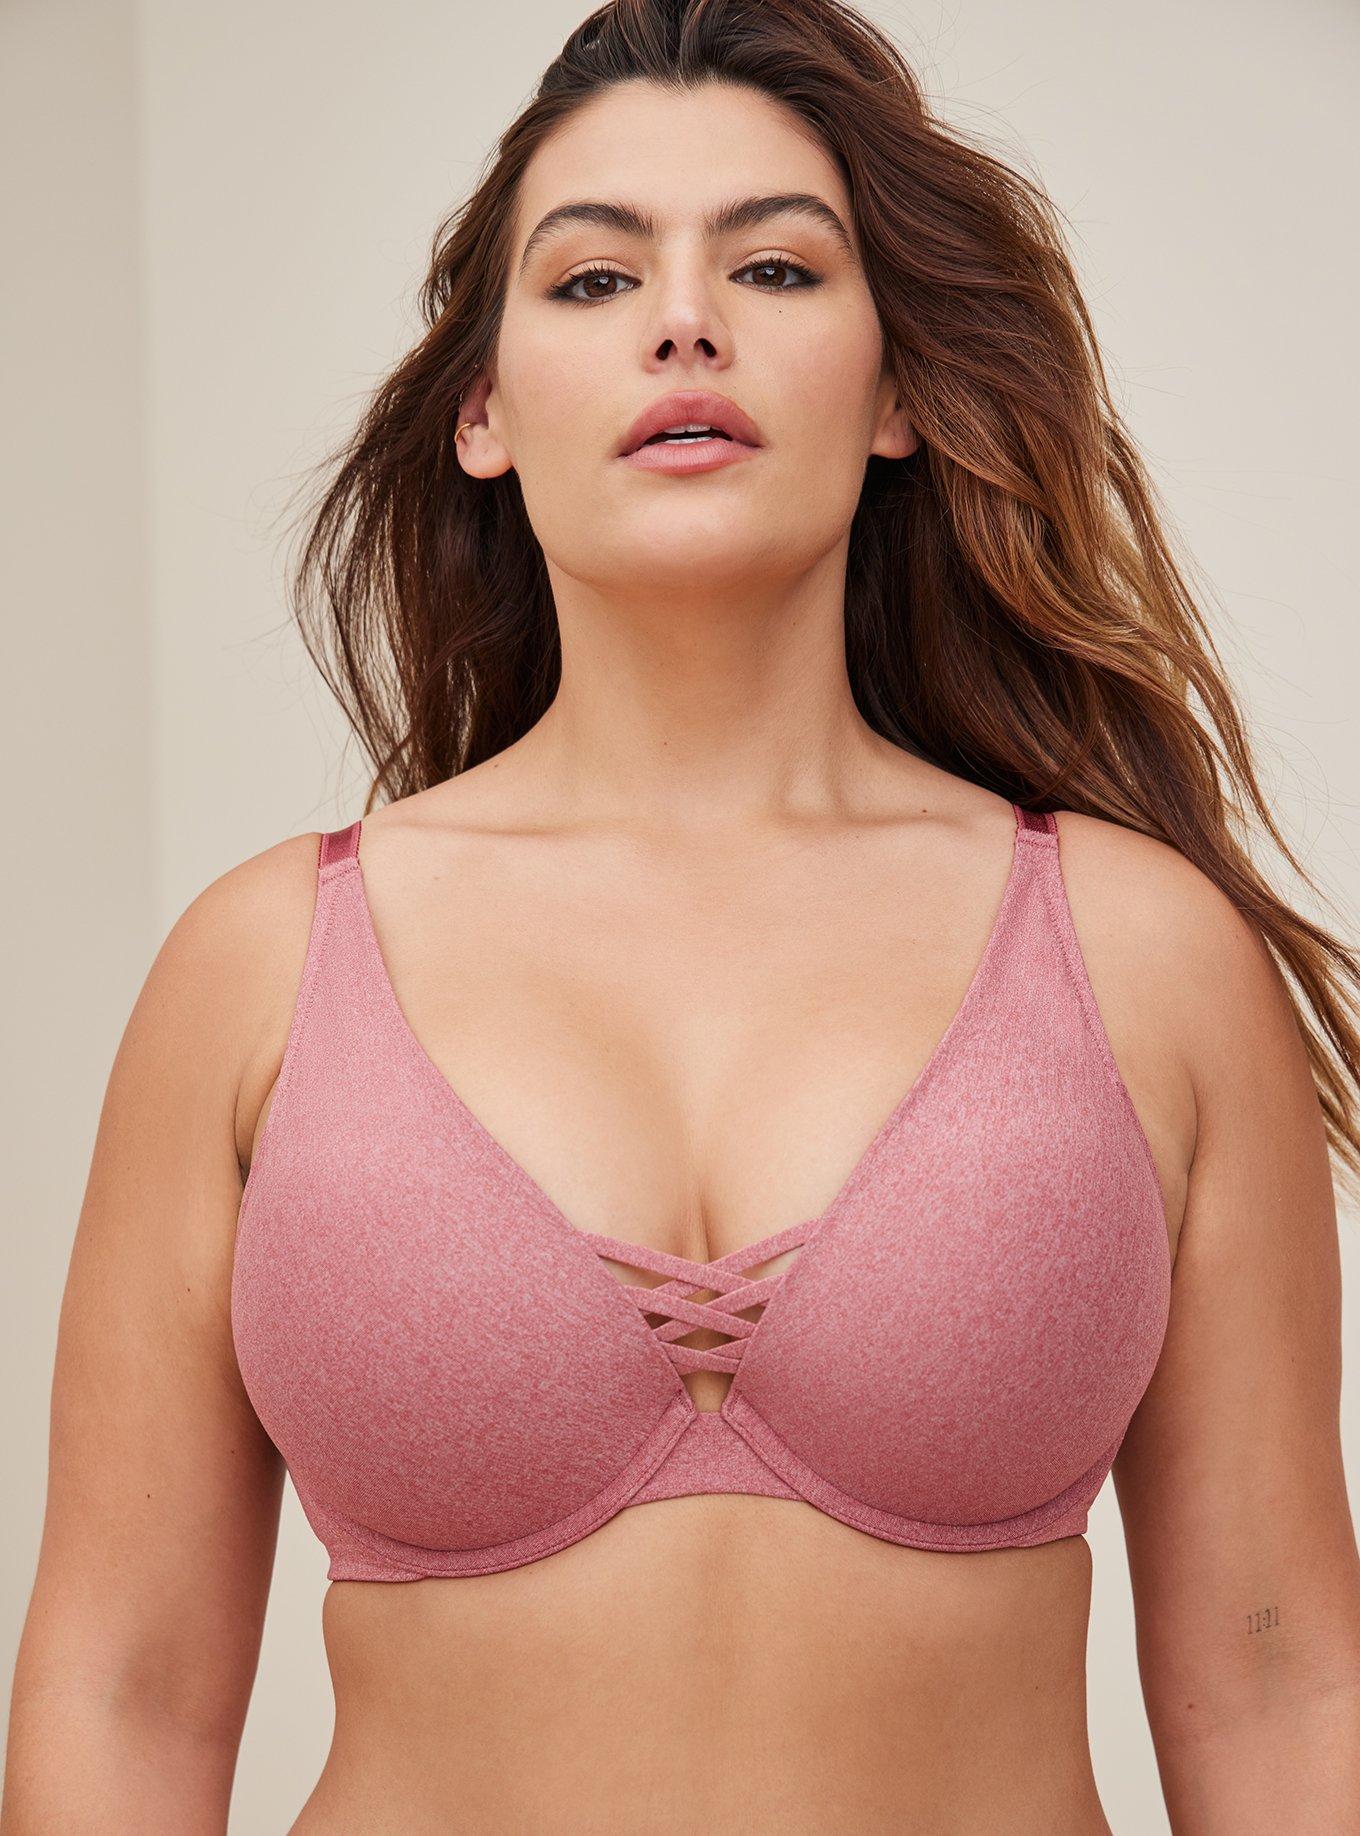 Edendiva's Ladies Plus Size Bra & Panty Set - Pink, Shop Today. Get it  Tomorrow!